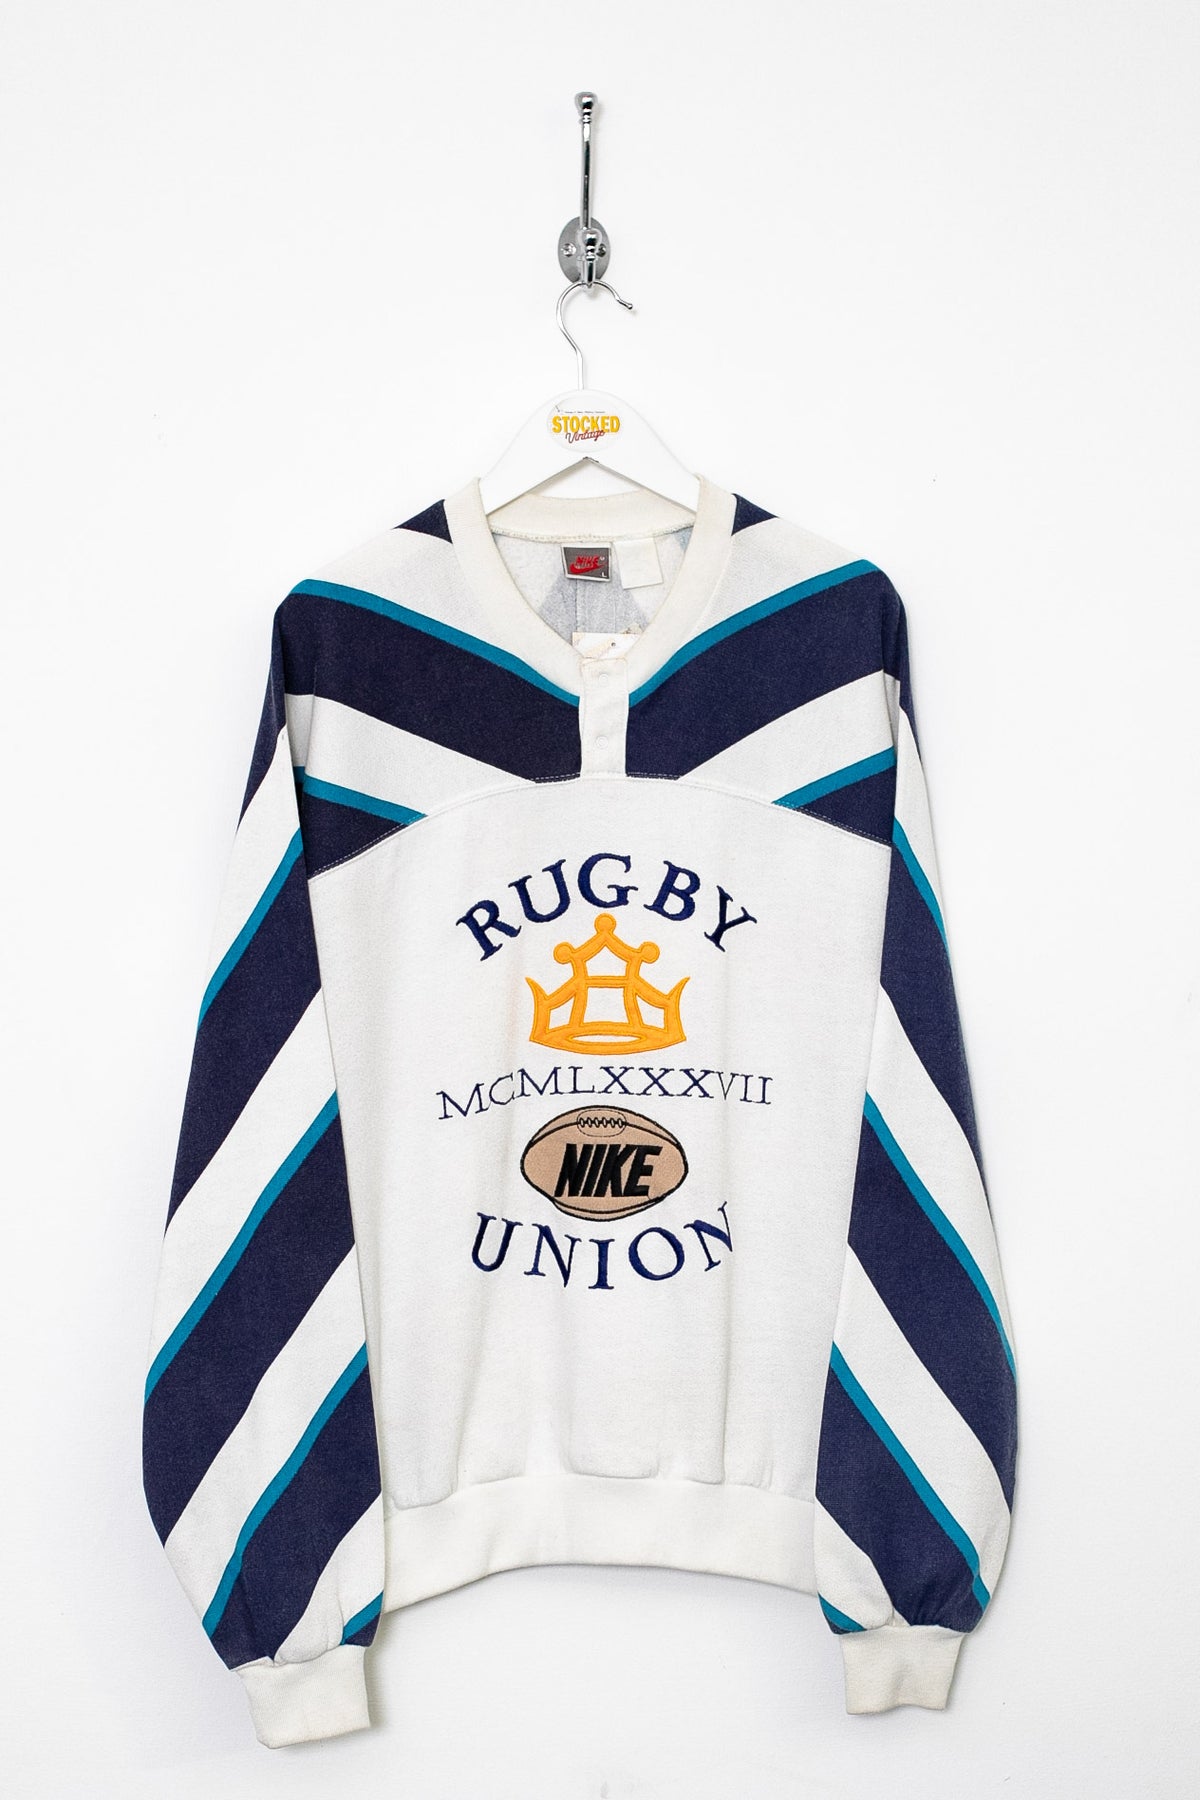 Rare 80s Nike Rugby Union Sweatshirt (M)